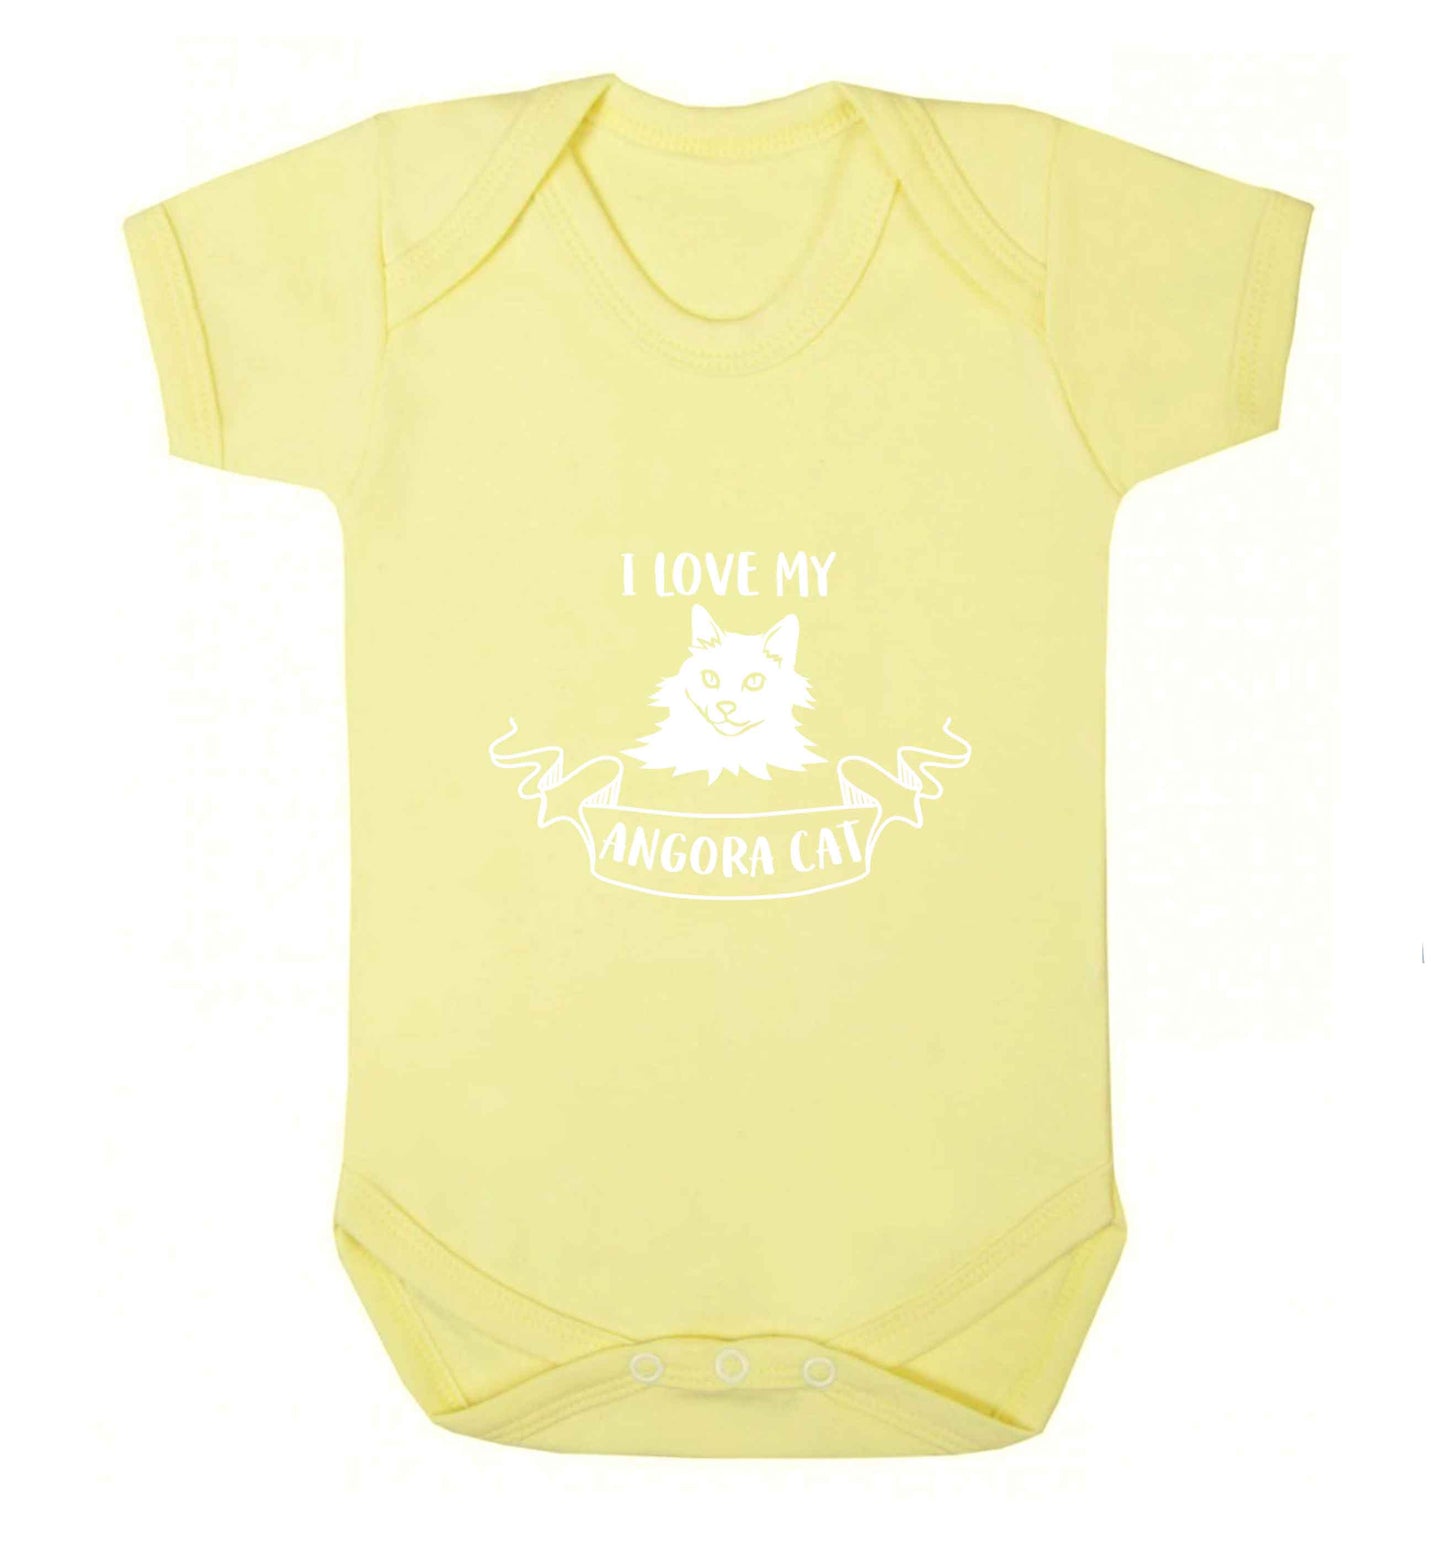 I love my angora cat baby vest pale yellow 18-24 months